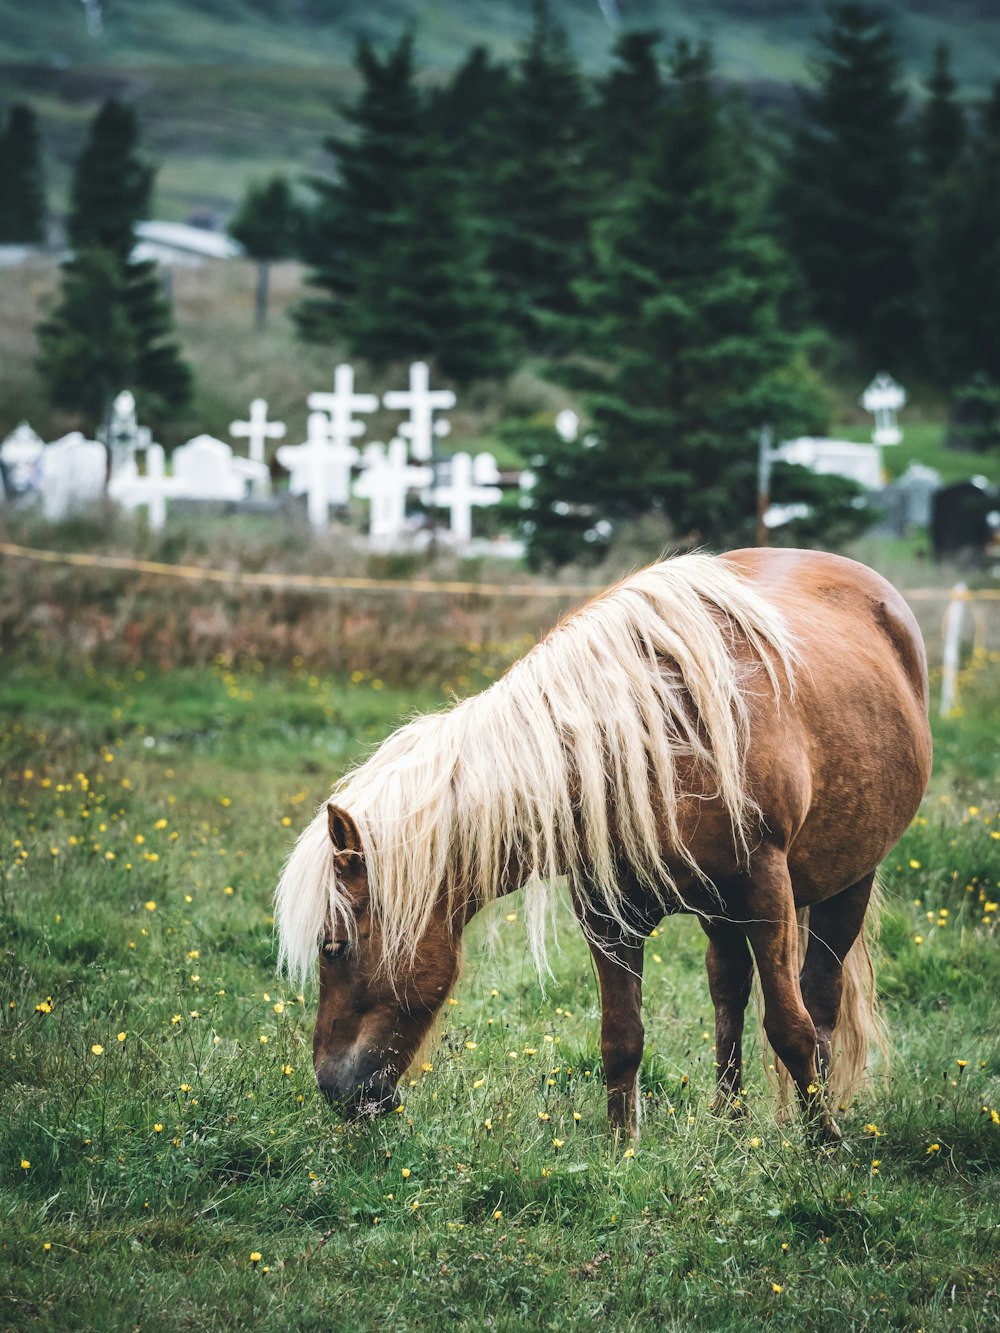 Fotografía de enfoque selectivo de caballo marrón cerca del cementerio